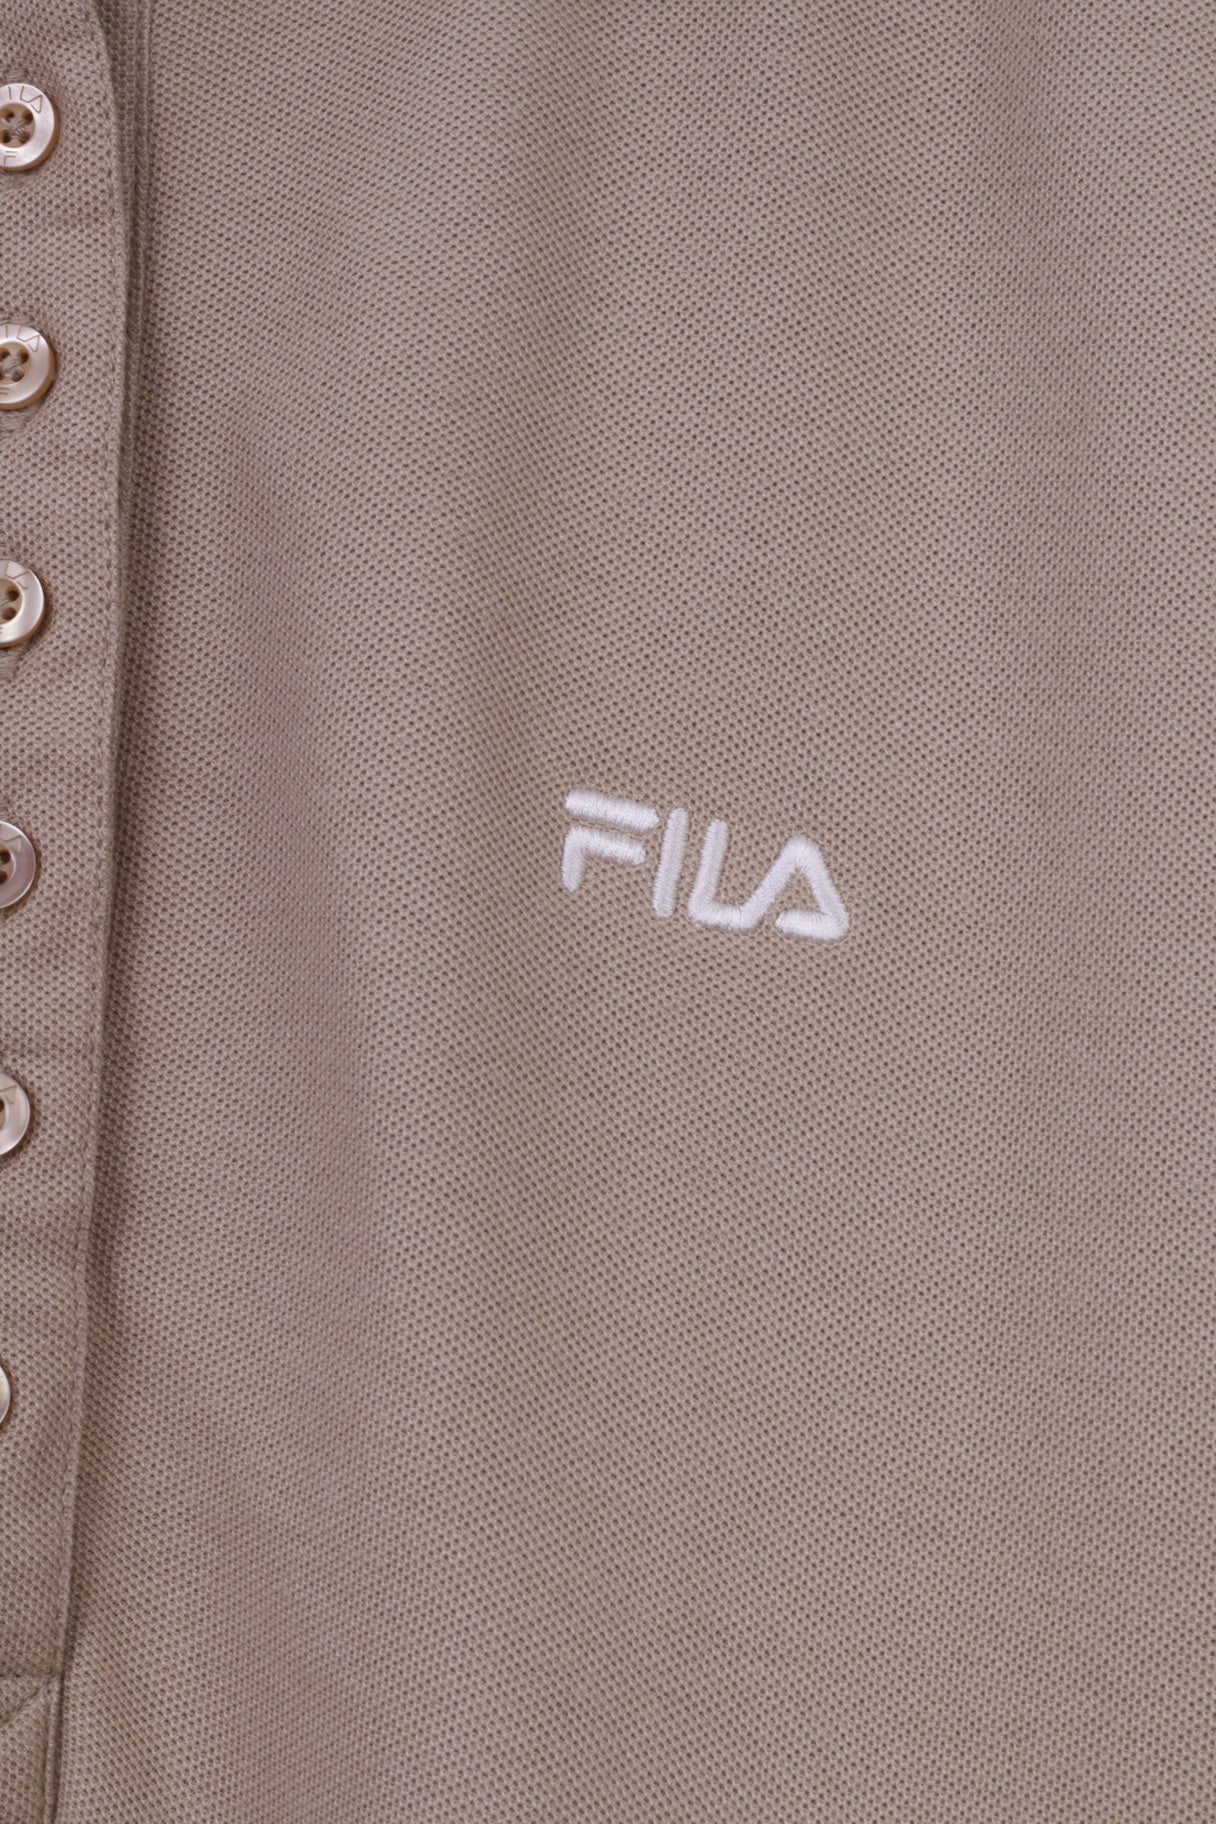 FILA Womens 16 XL Polo Shirt Beige Cotton Stretch Detailed Buttons Sport Top